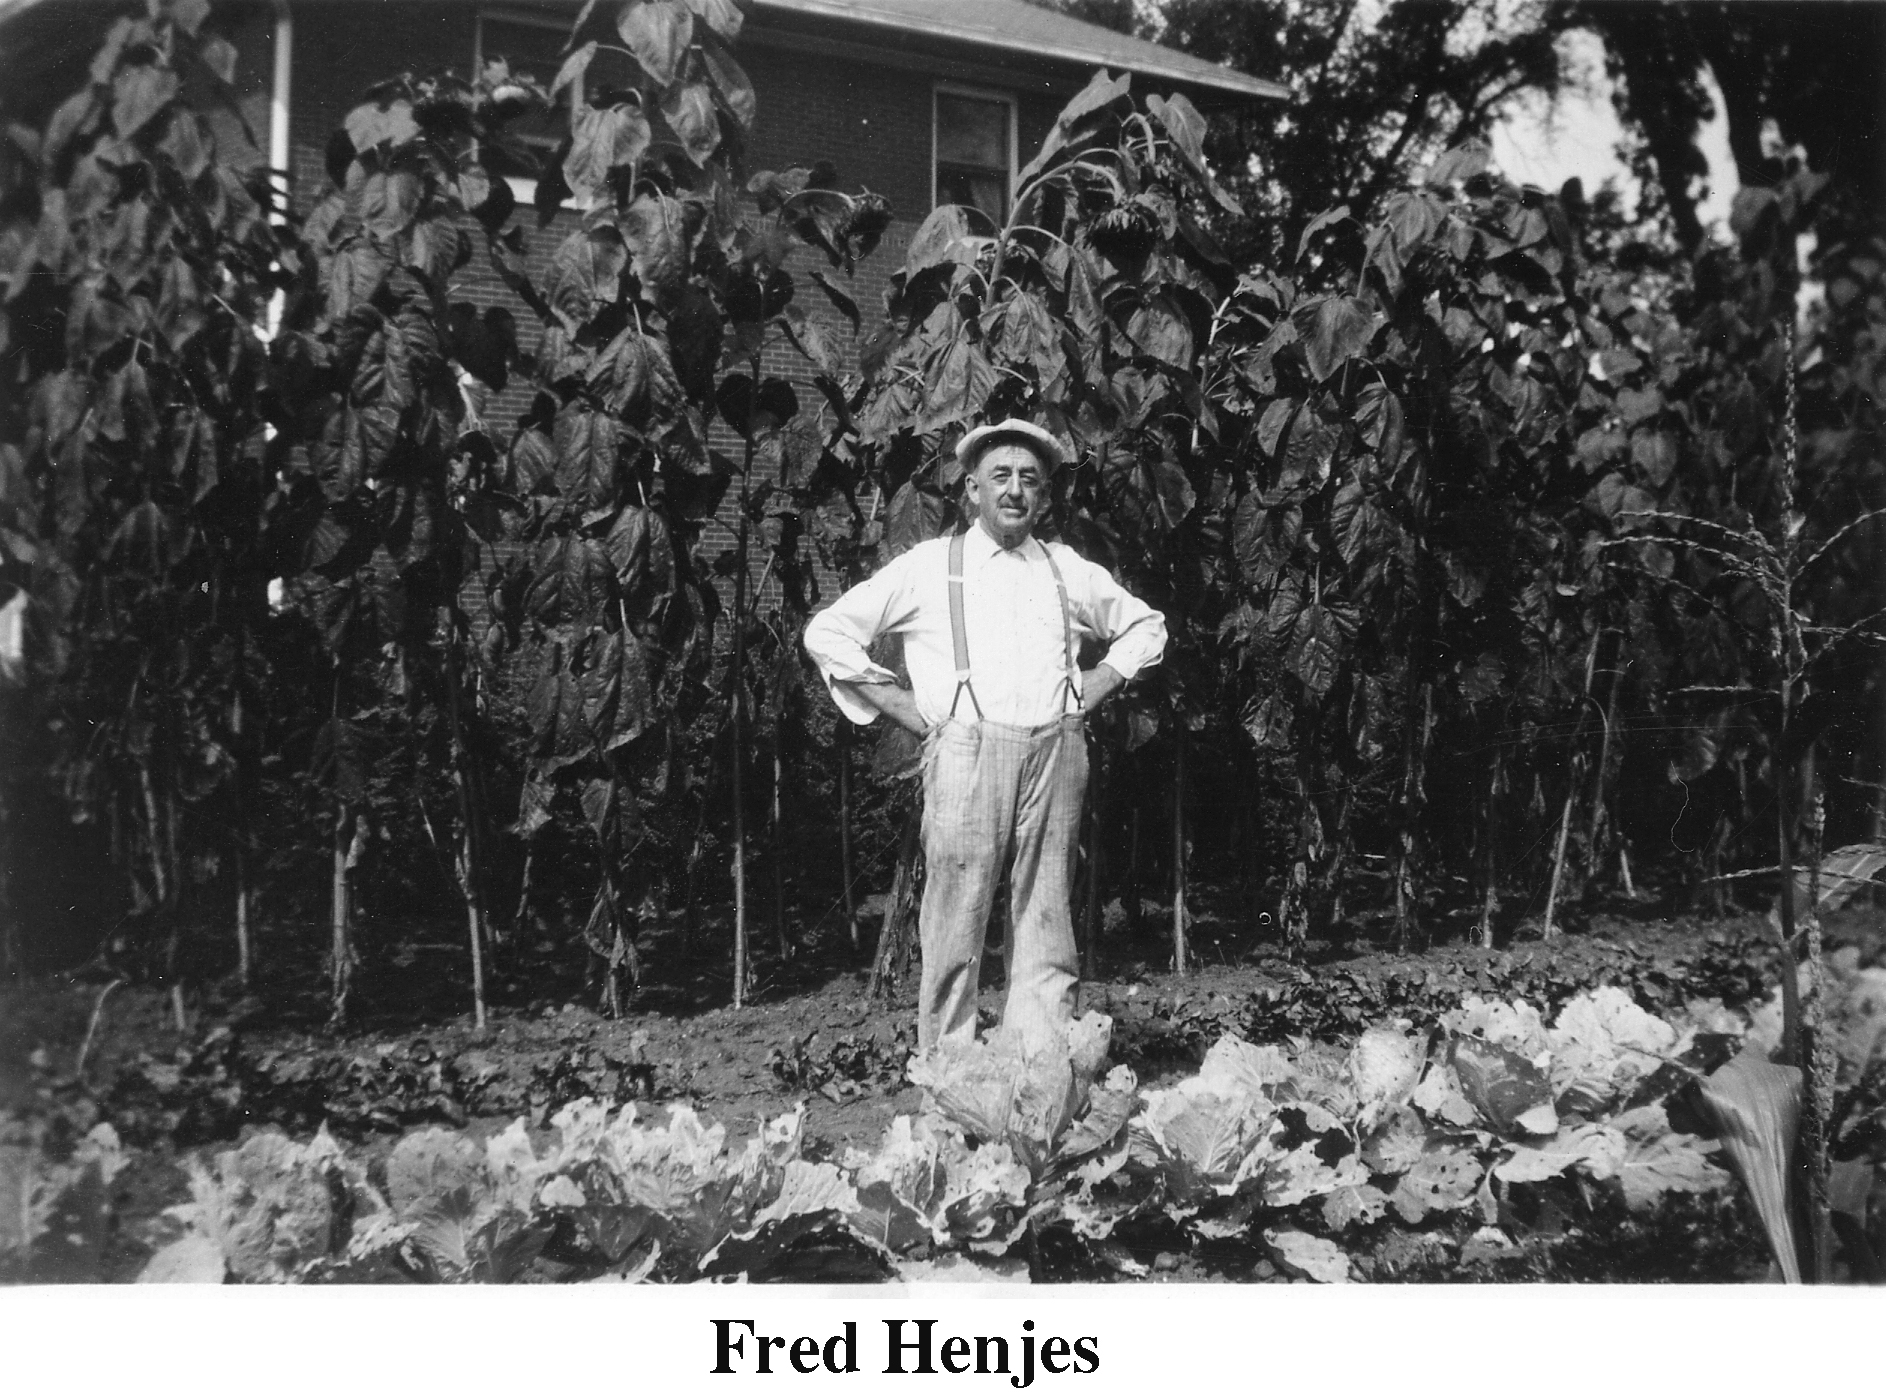 Fred Henjes in his garden